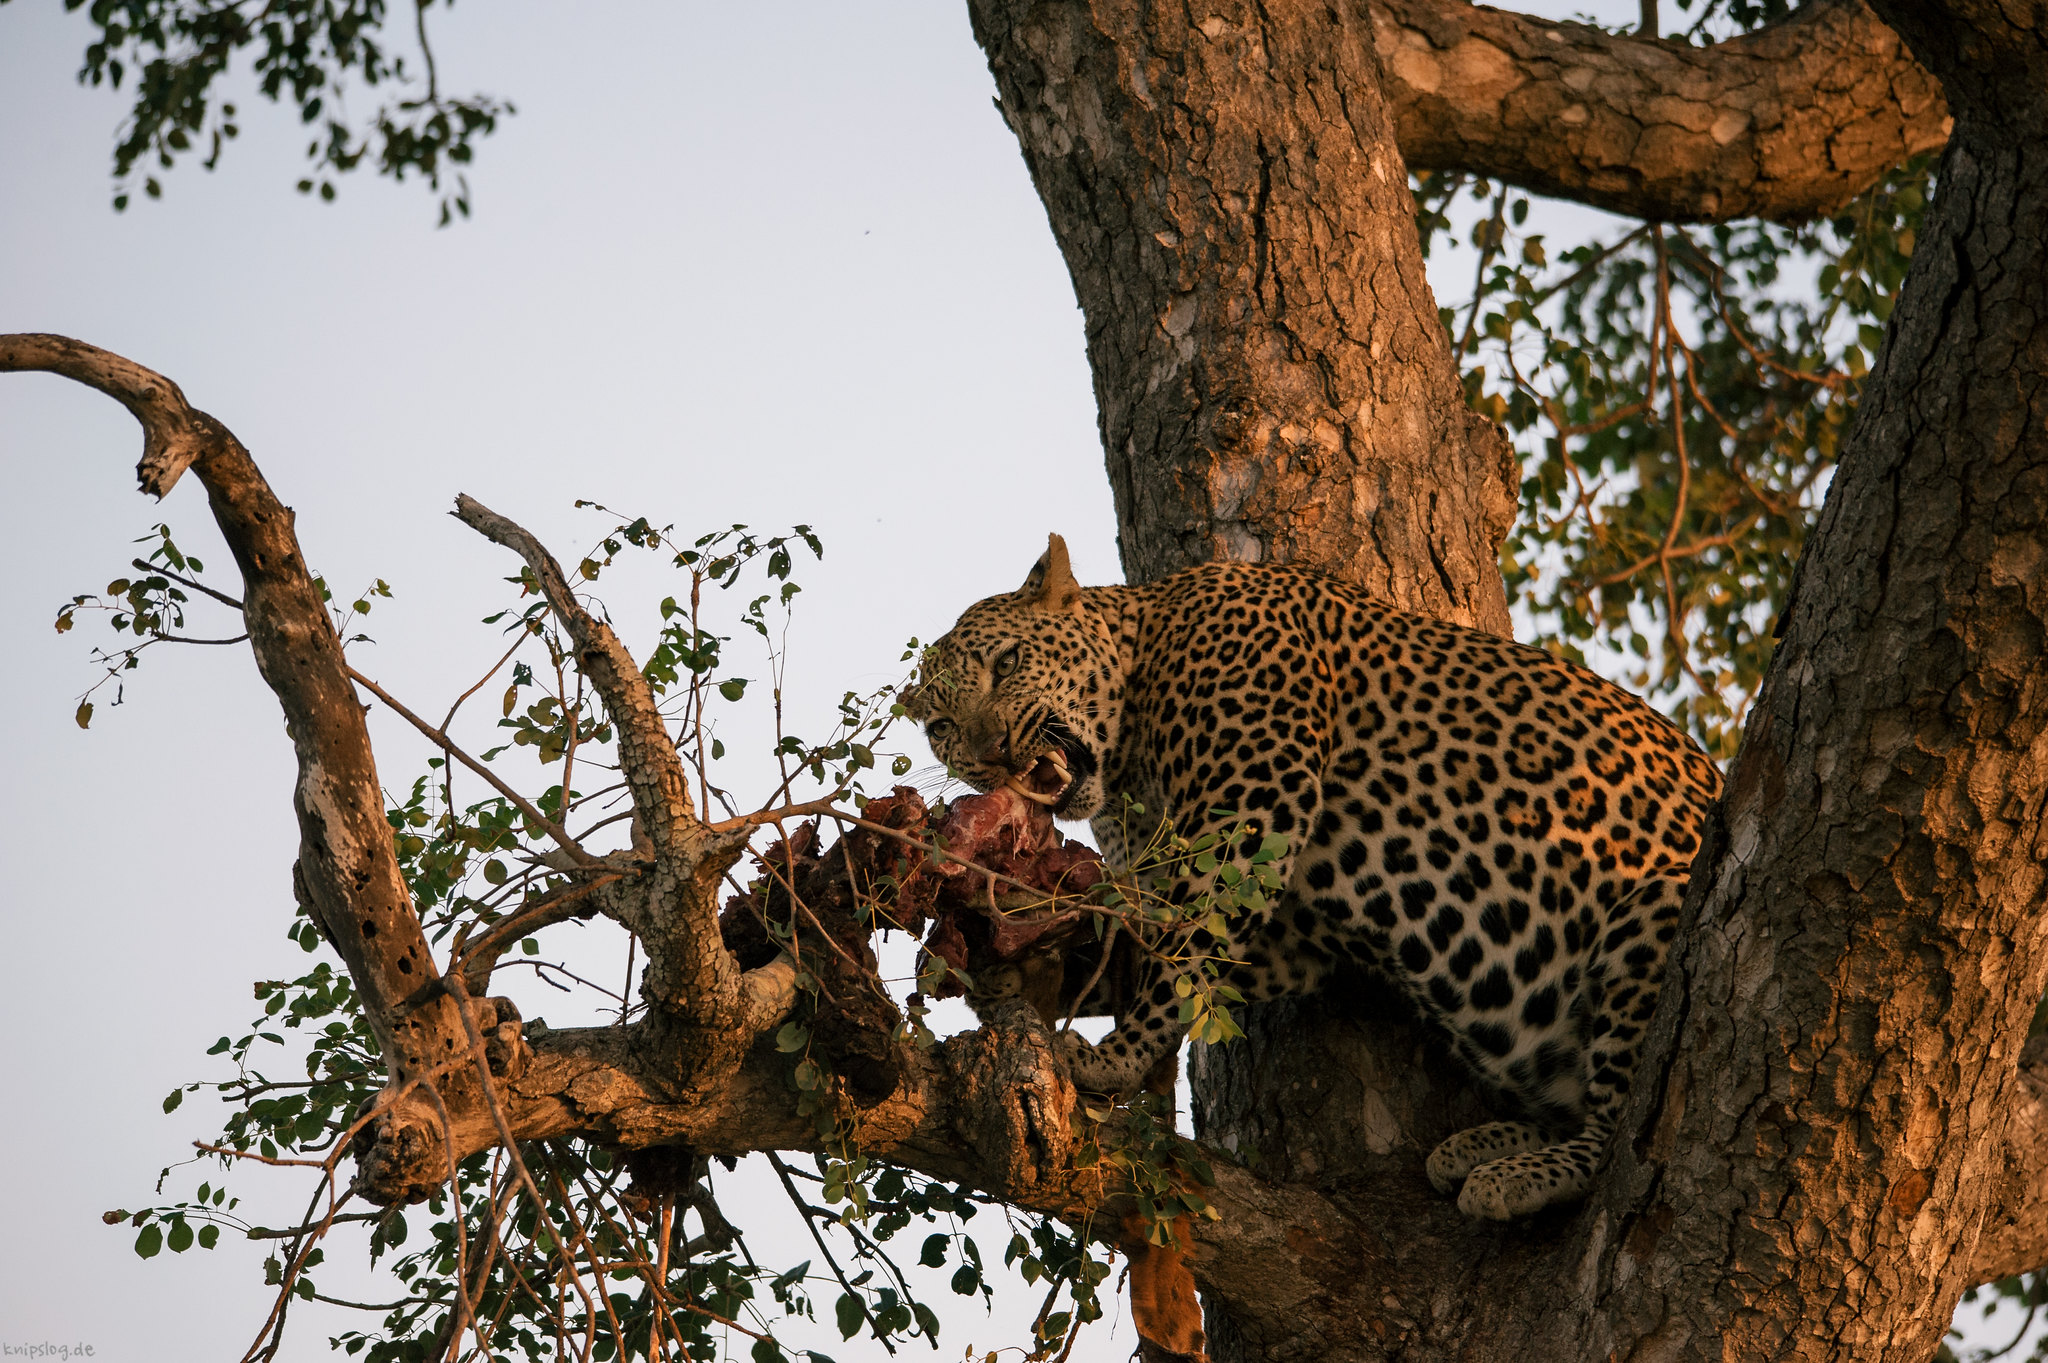 Leopard eat an impala